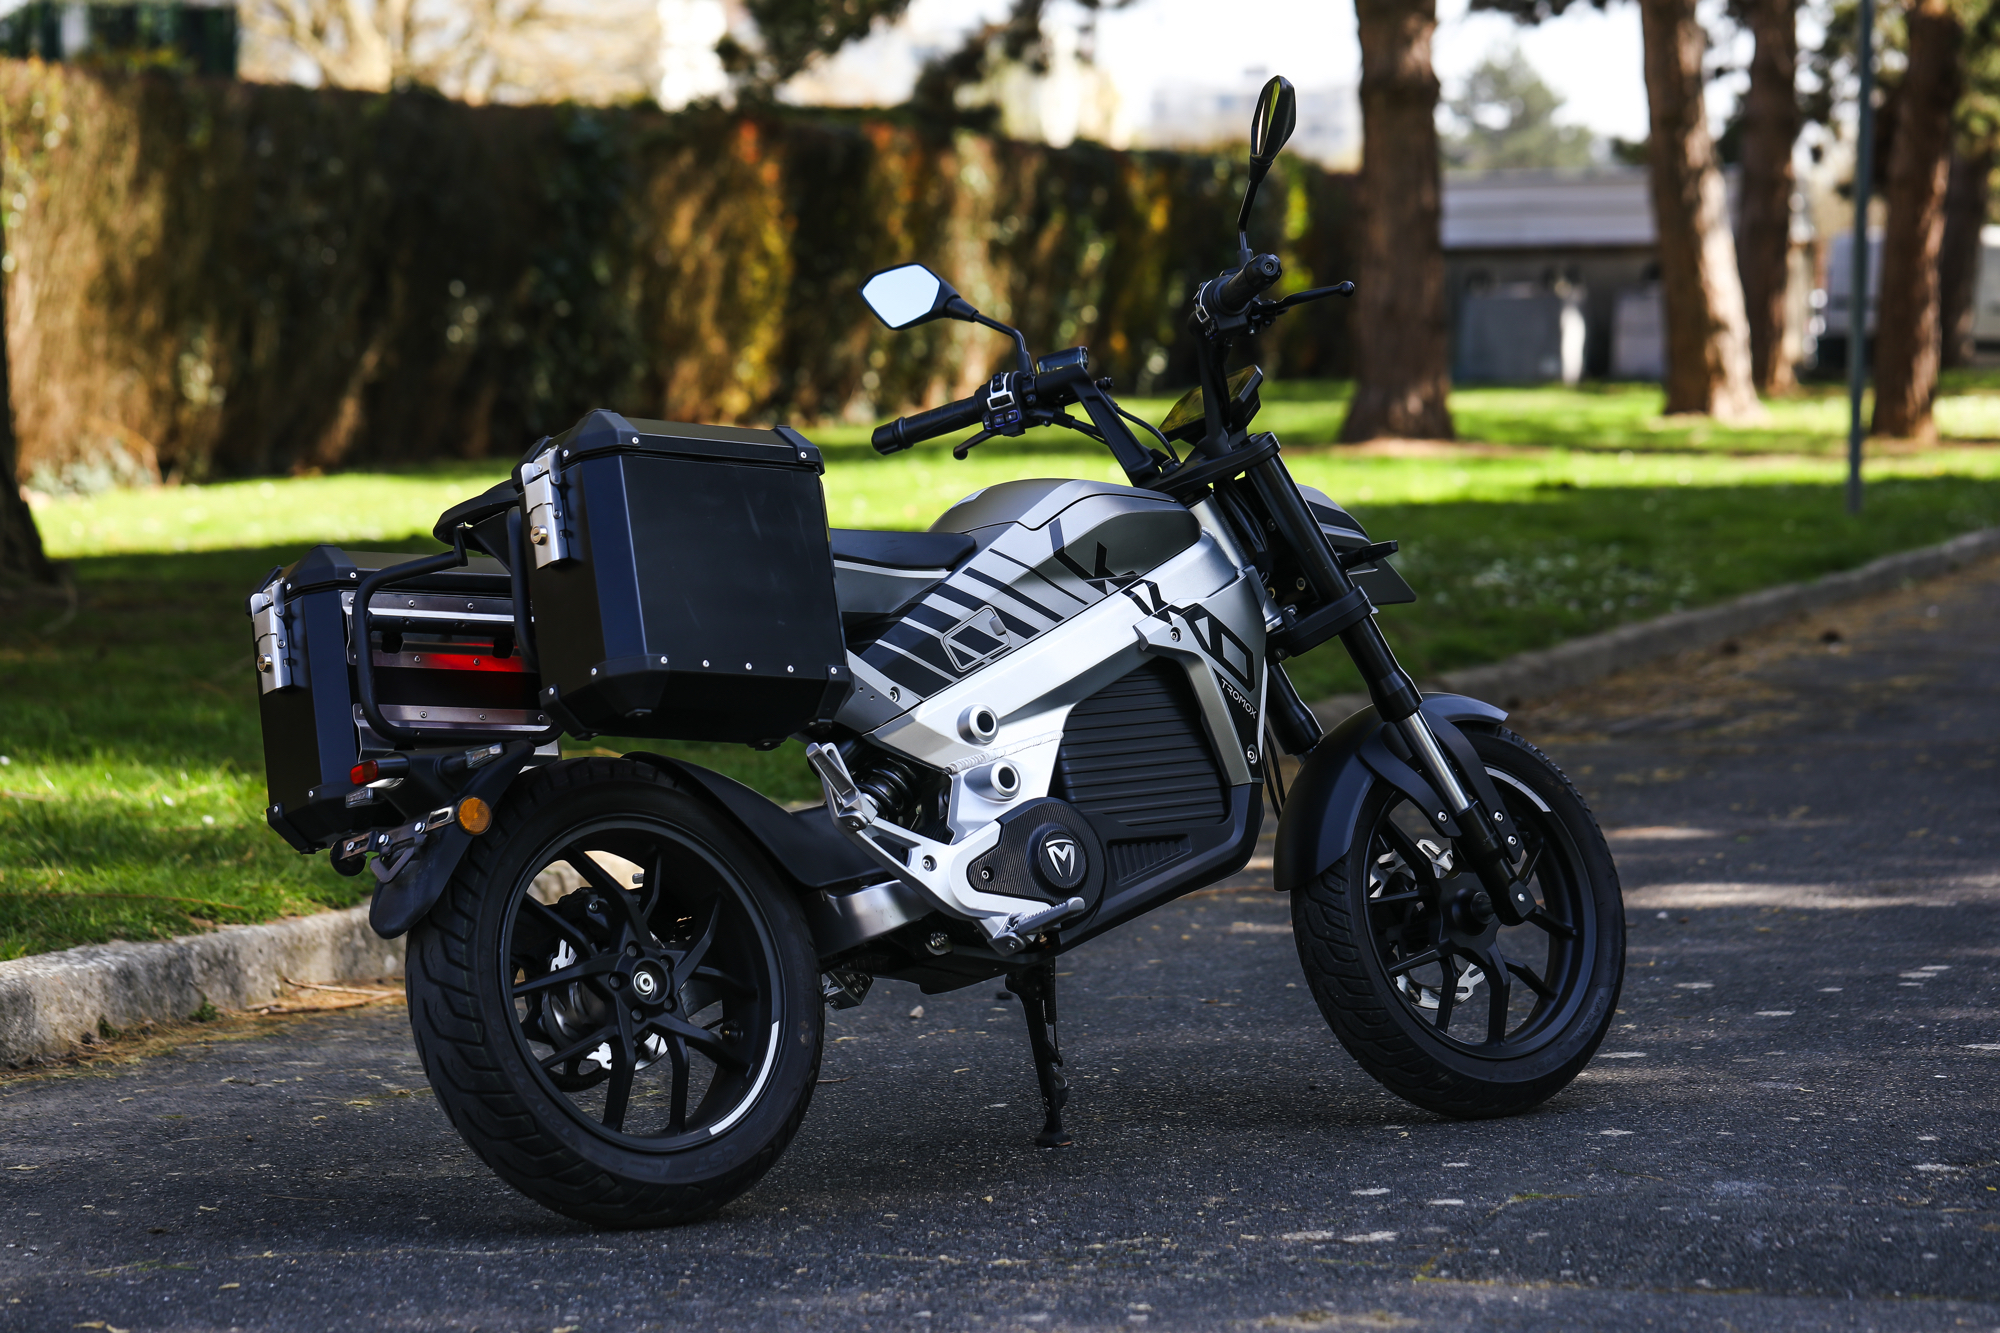 Essai Tromox Ukko S : une mini-moto électrique 125 originale au